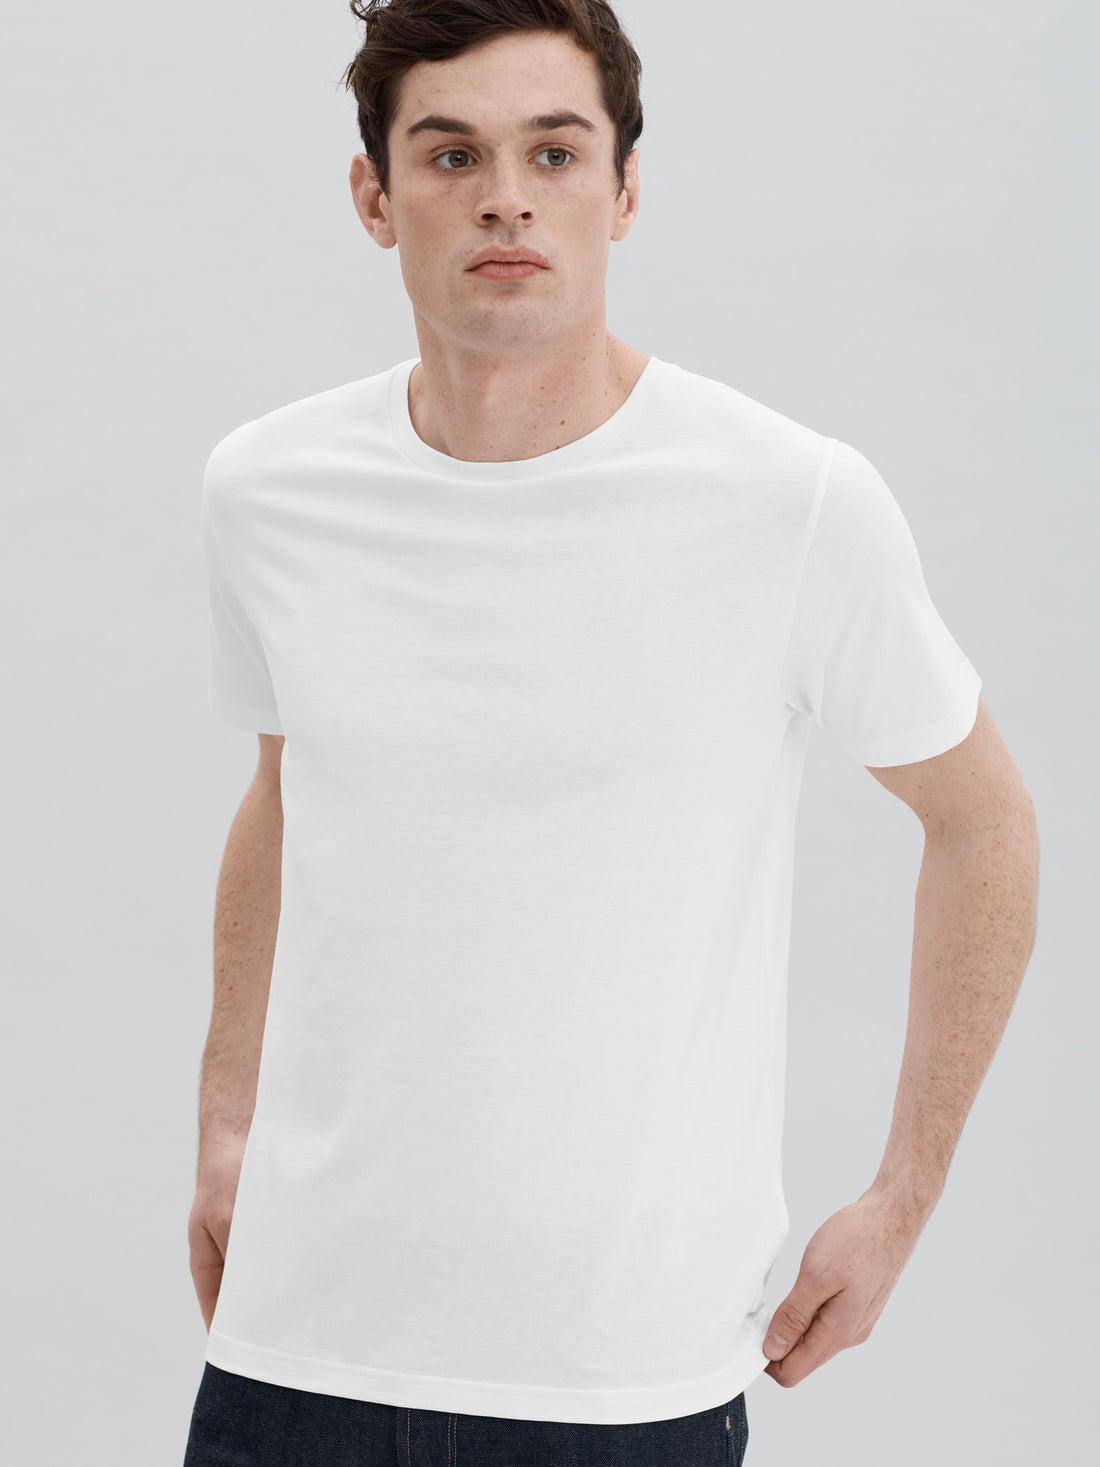 Crew Neck T Shirt- White